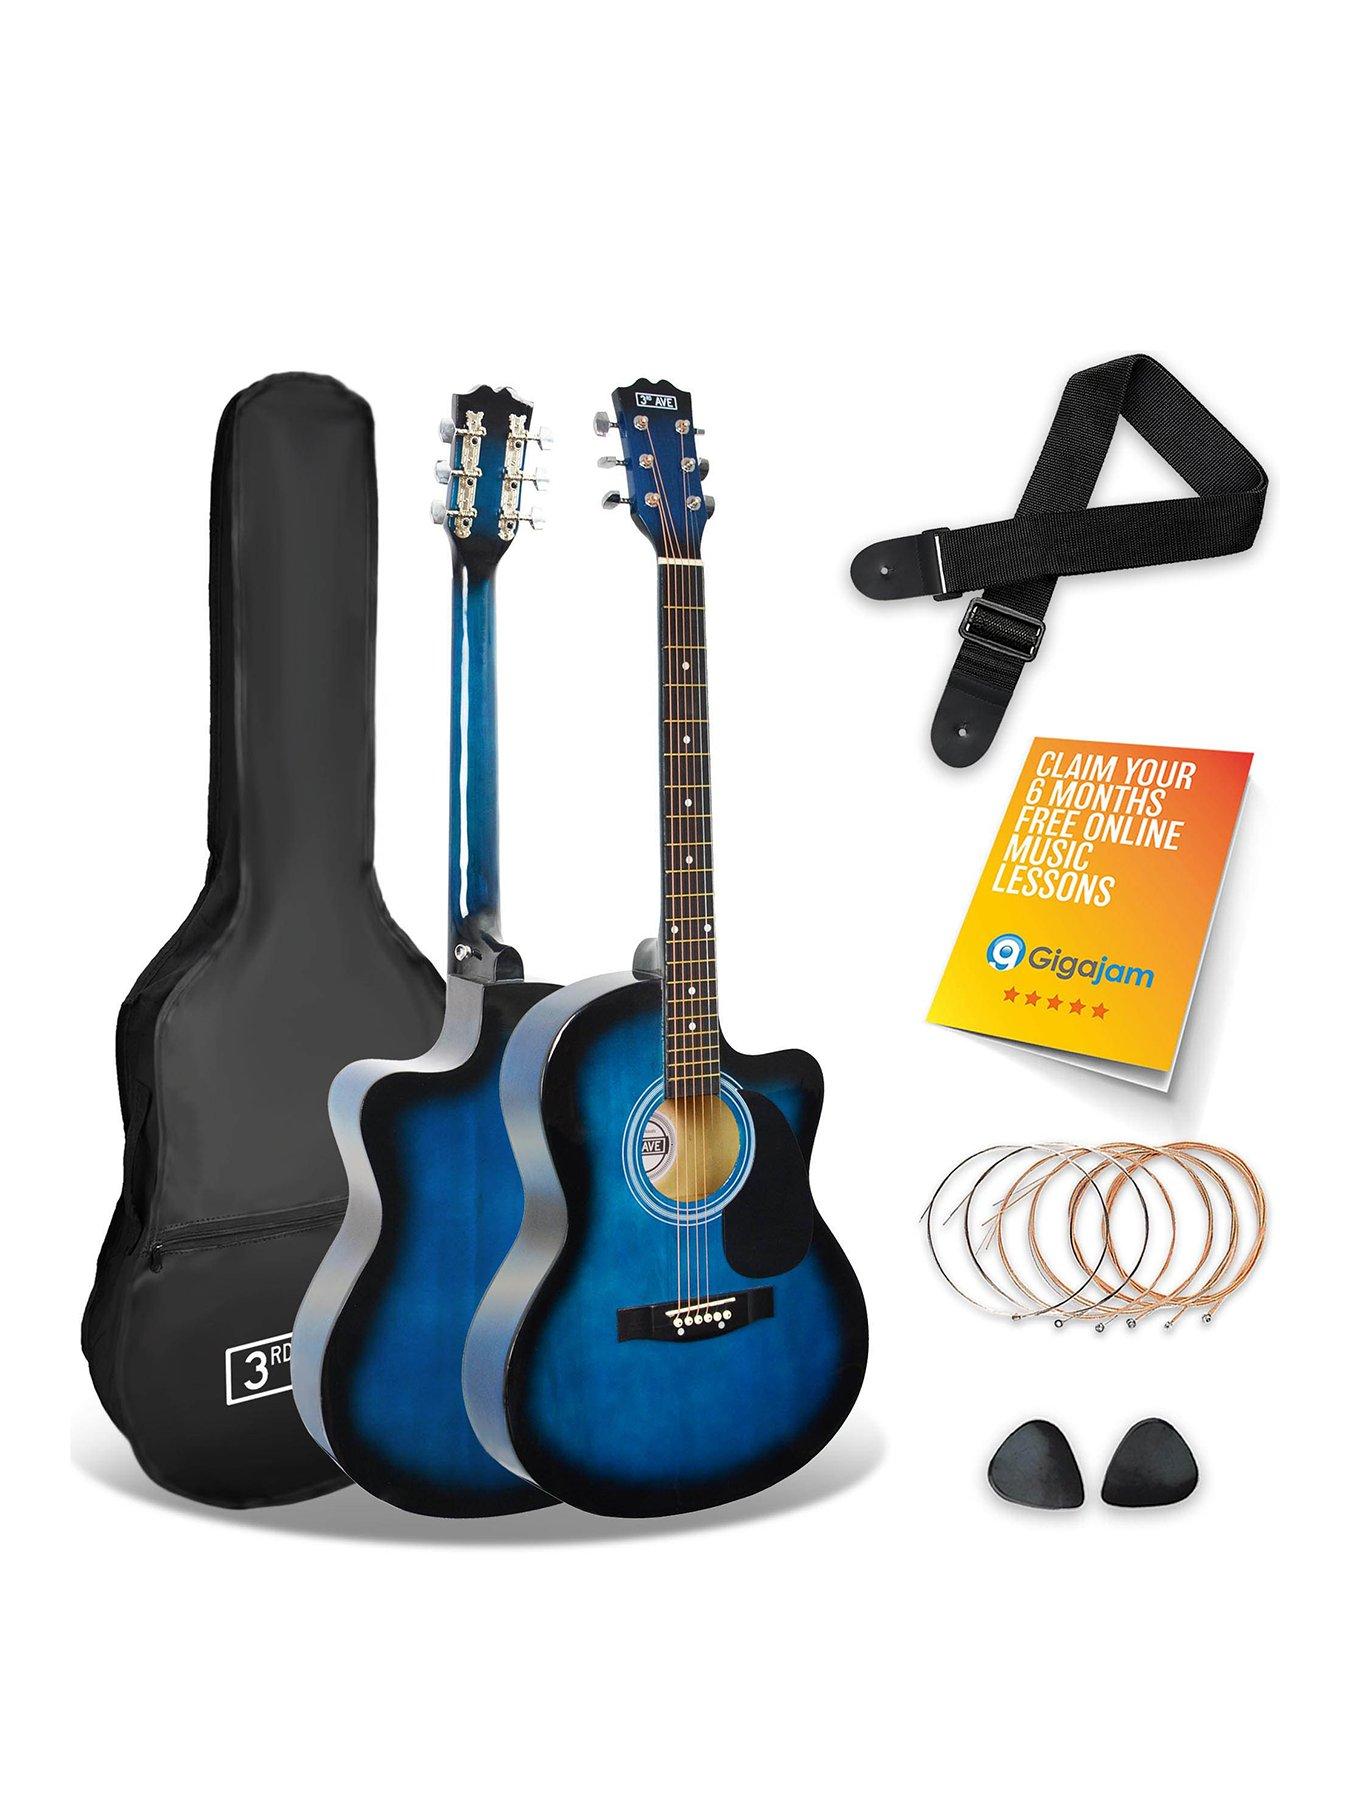 Miniature Acoustic Guitar NEIL DIAMOND Memorabilia FREE Stand GIFT 